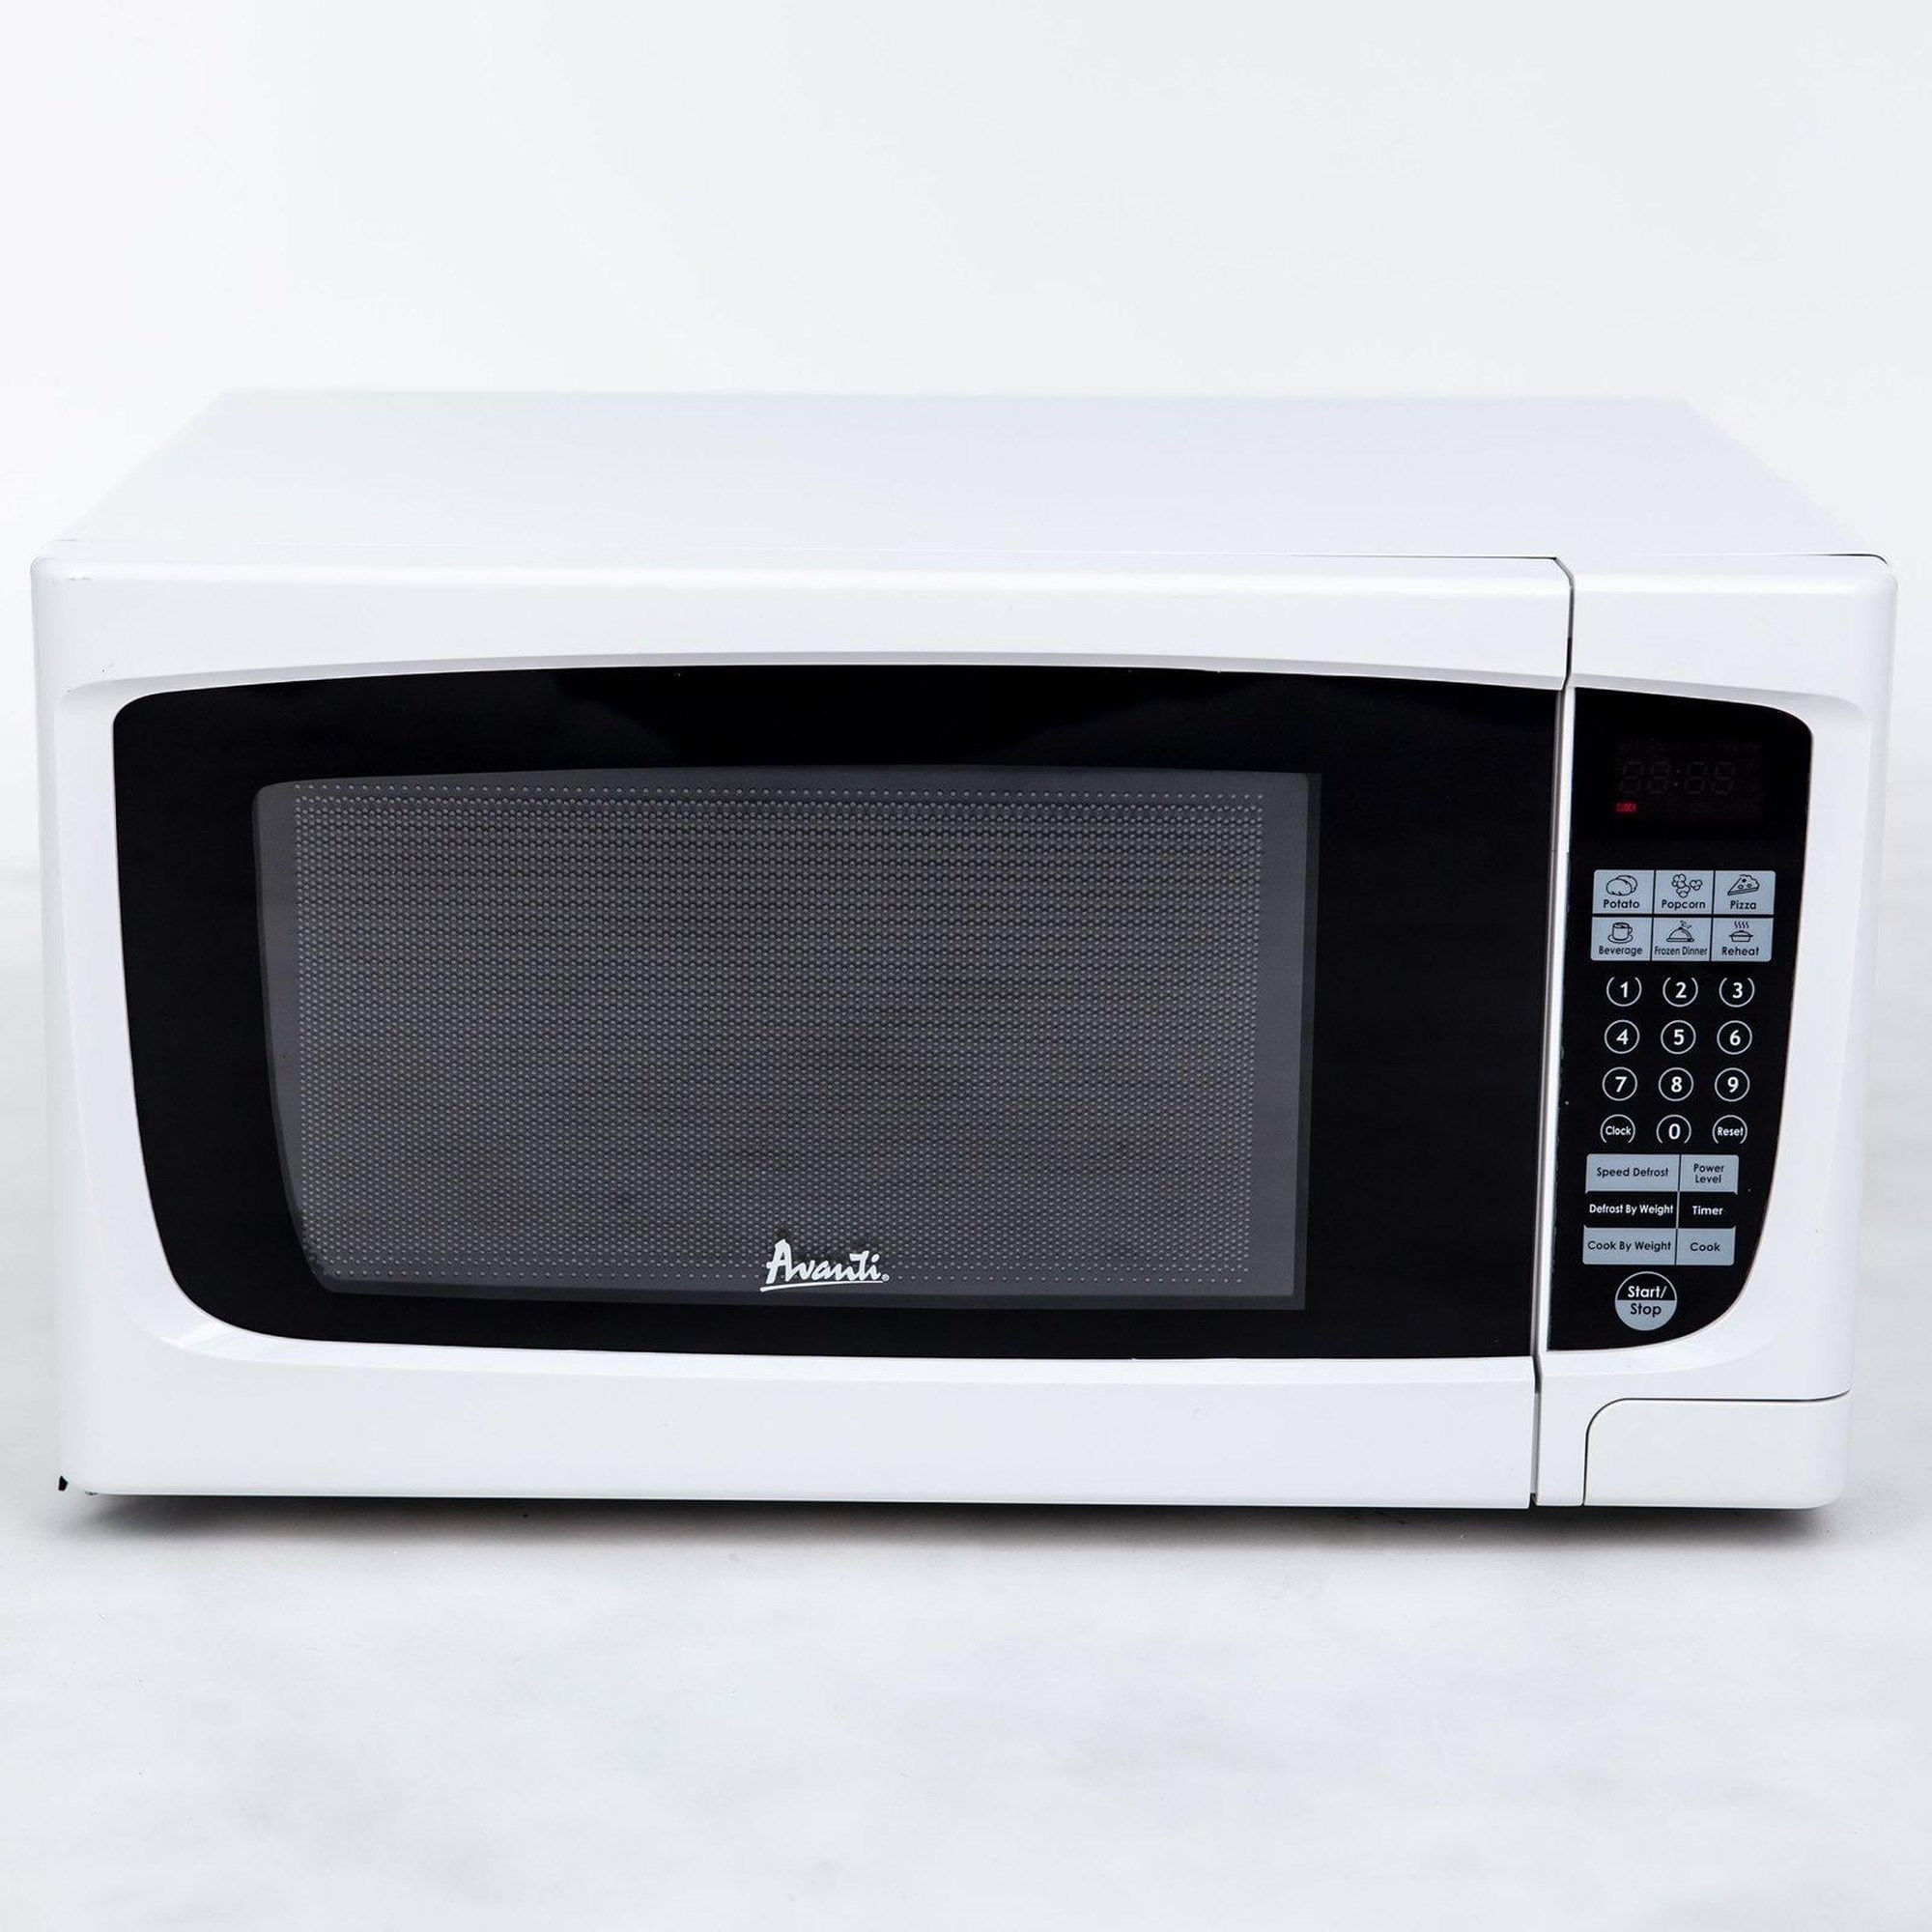 Dorm-small microwave